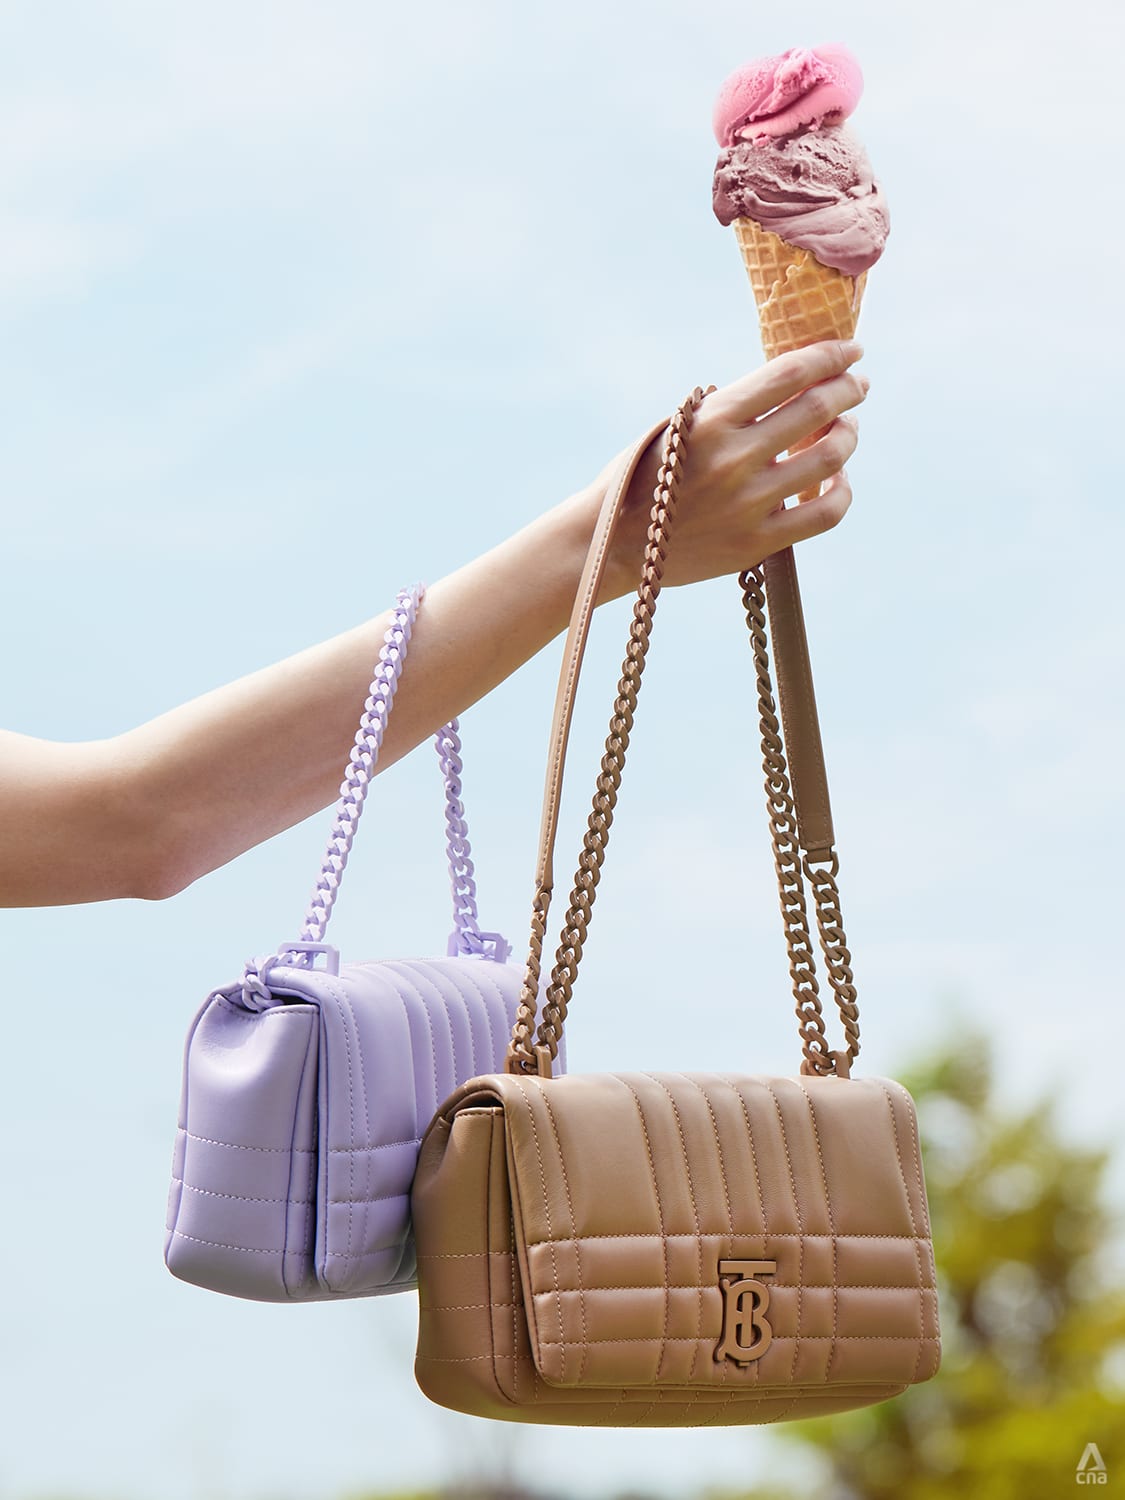 What makes that designer handbag so expensive? - CNA Lifestyle